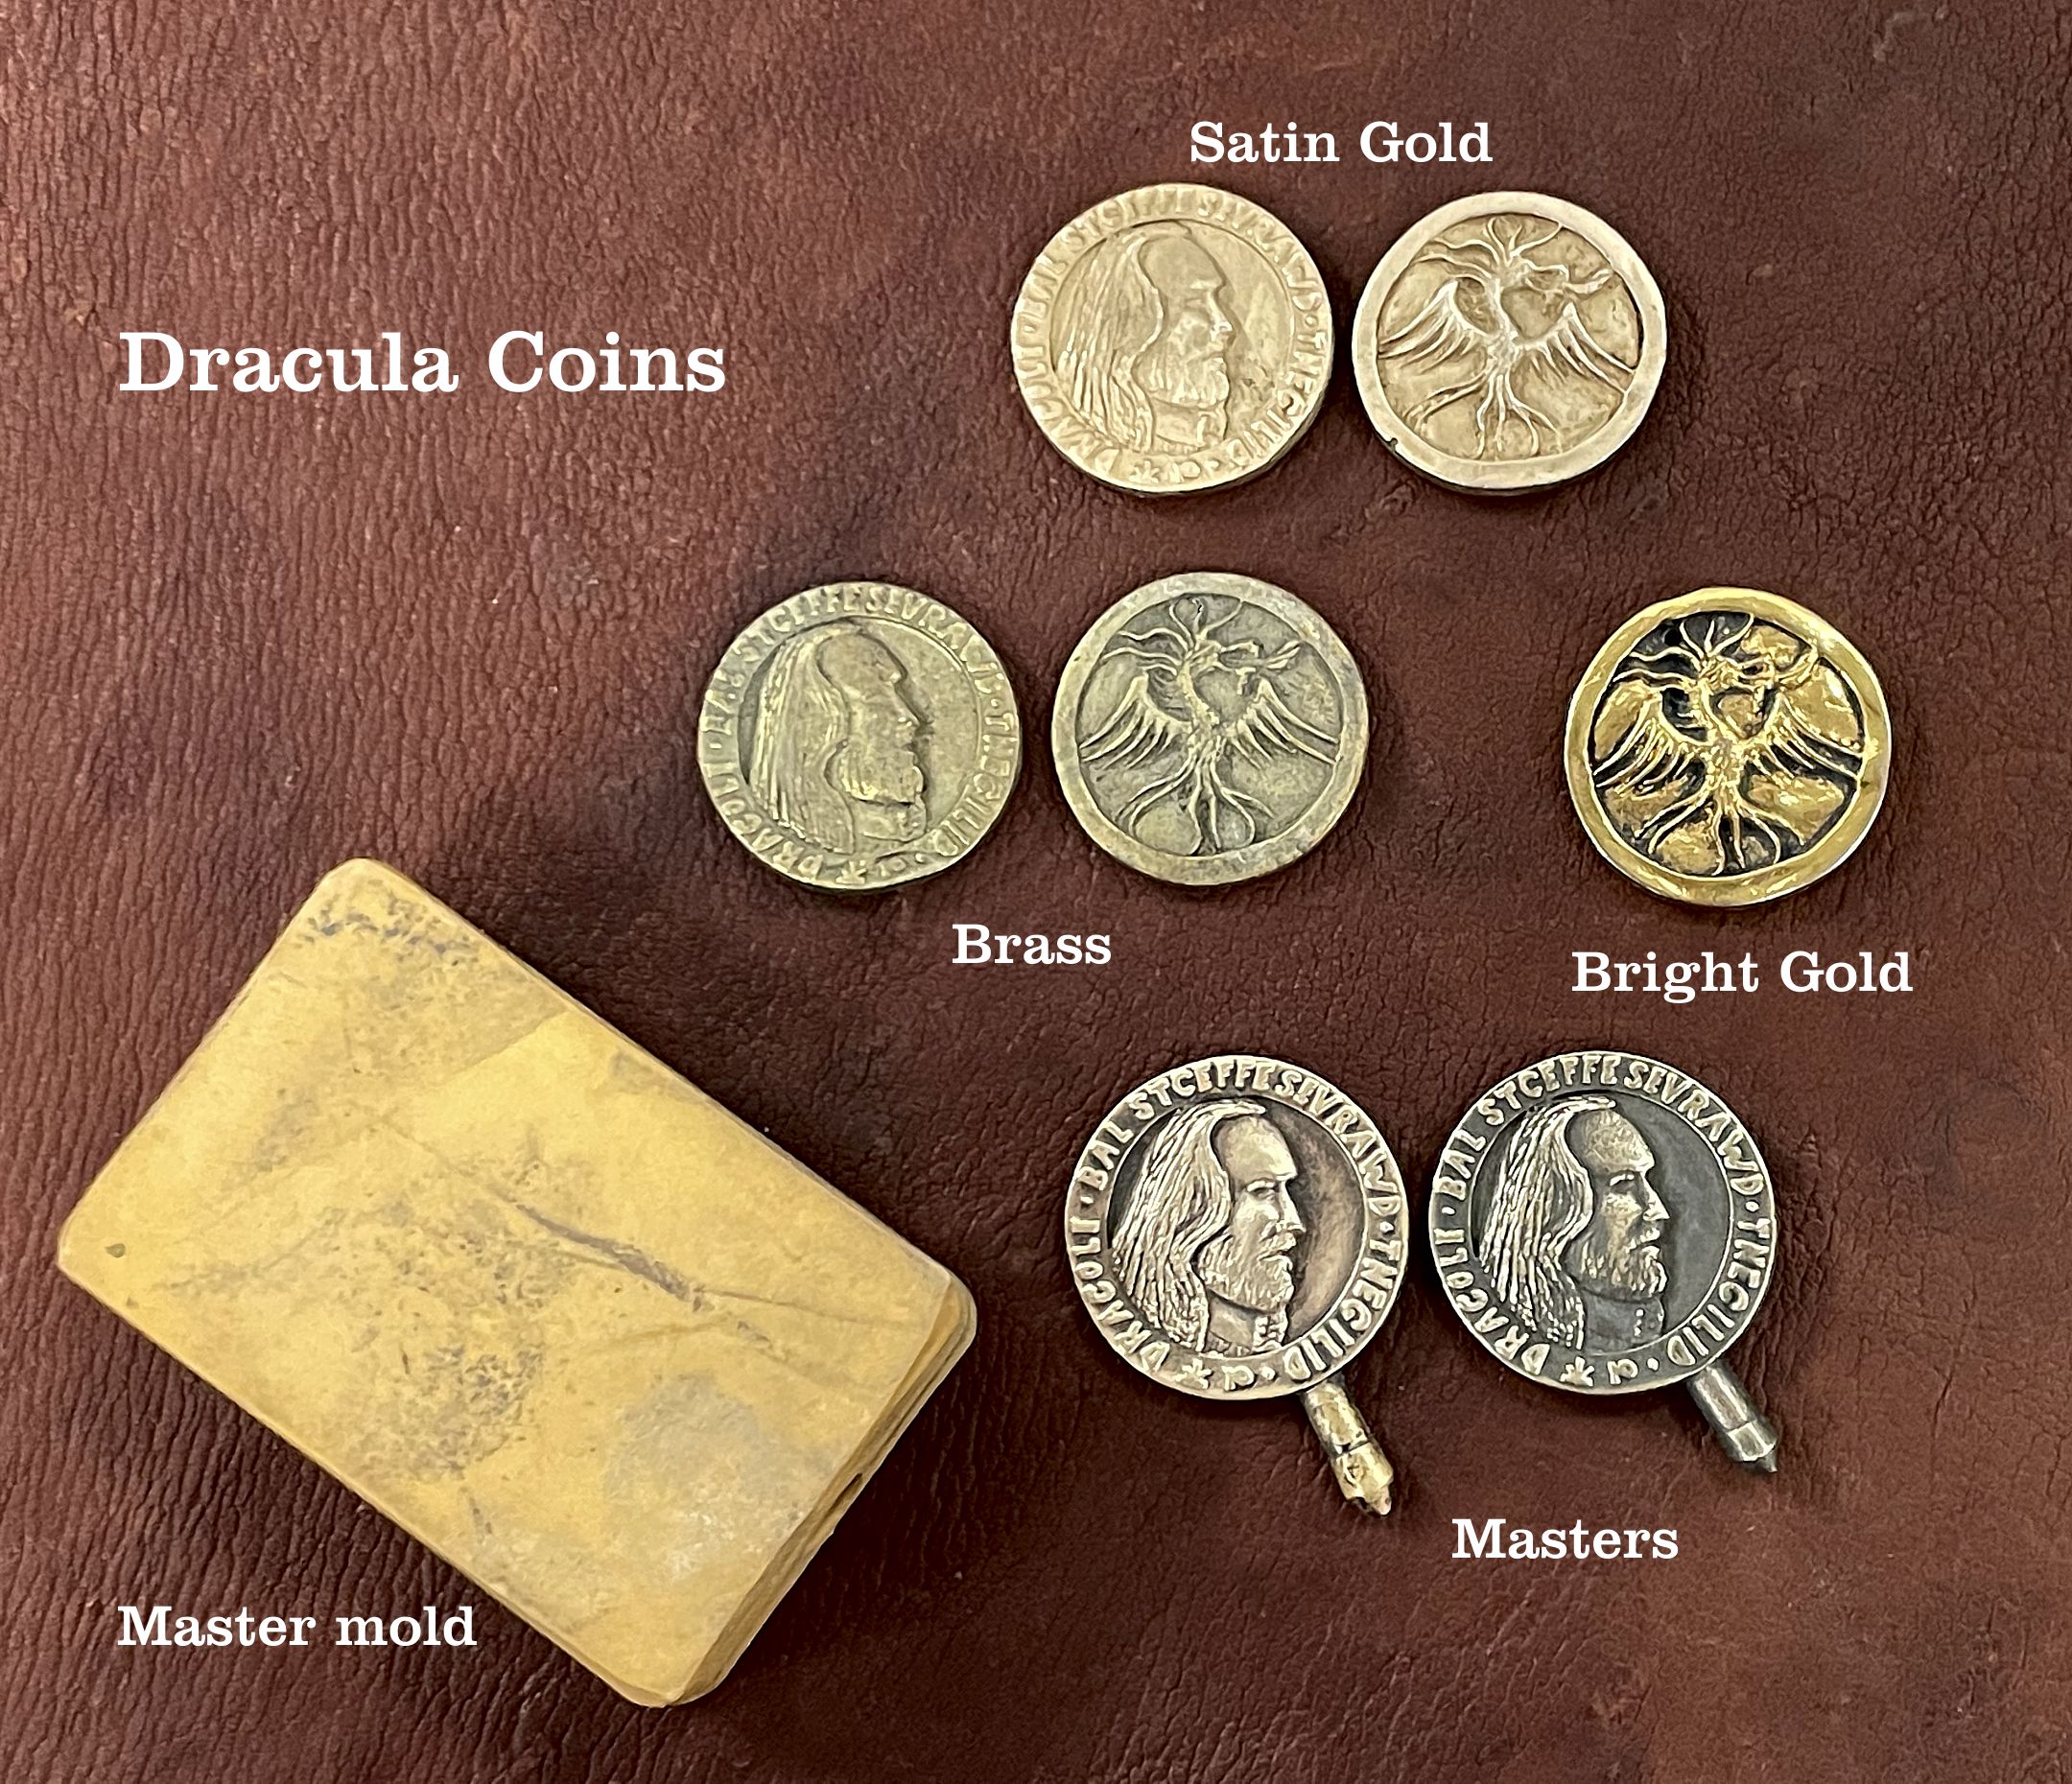 Dracula coin-all.jpg